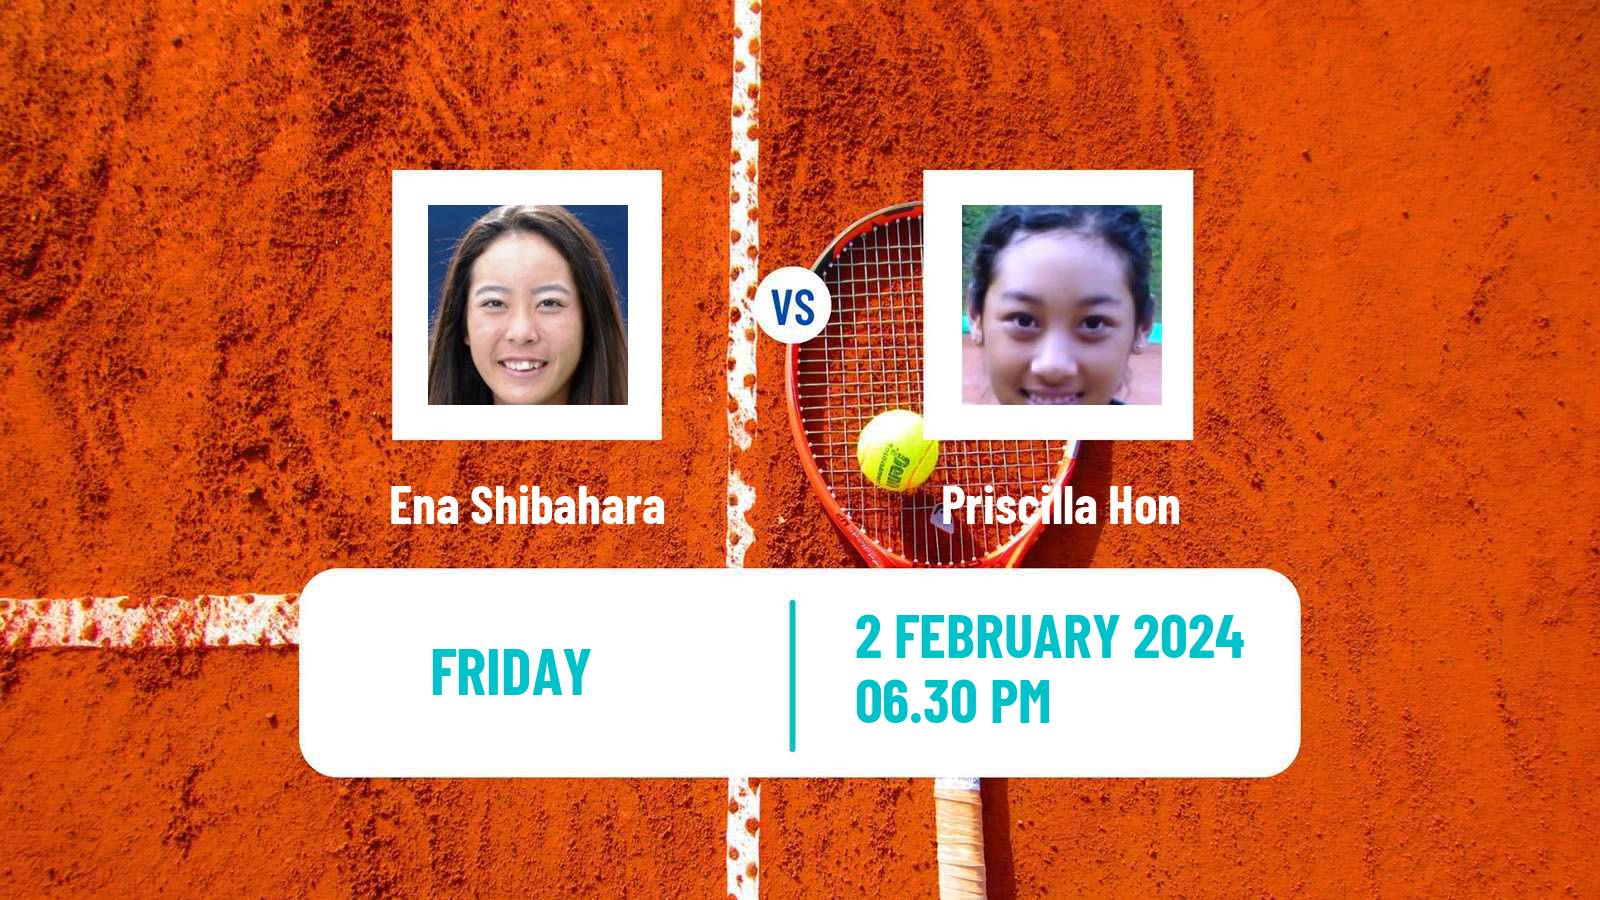 Tennis ITF W75 Burnie Women Ena Shibahara - Priscilla Hon